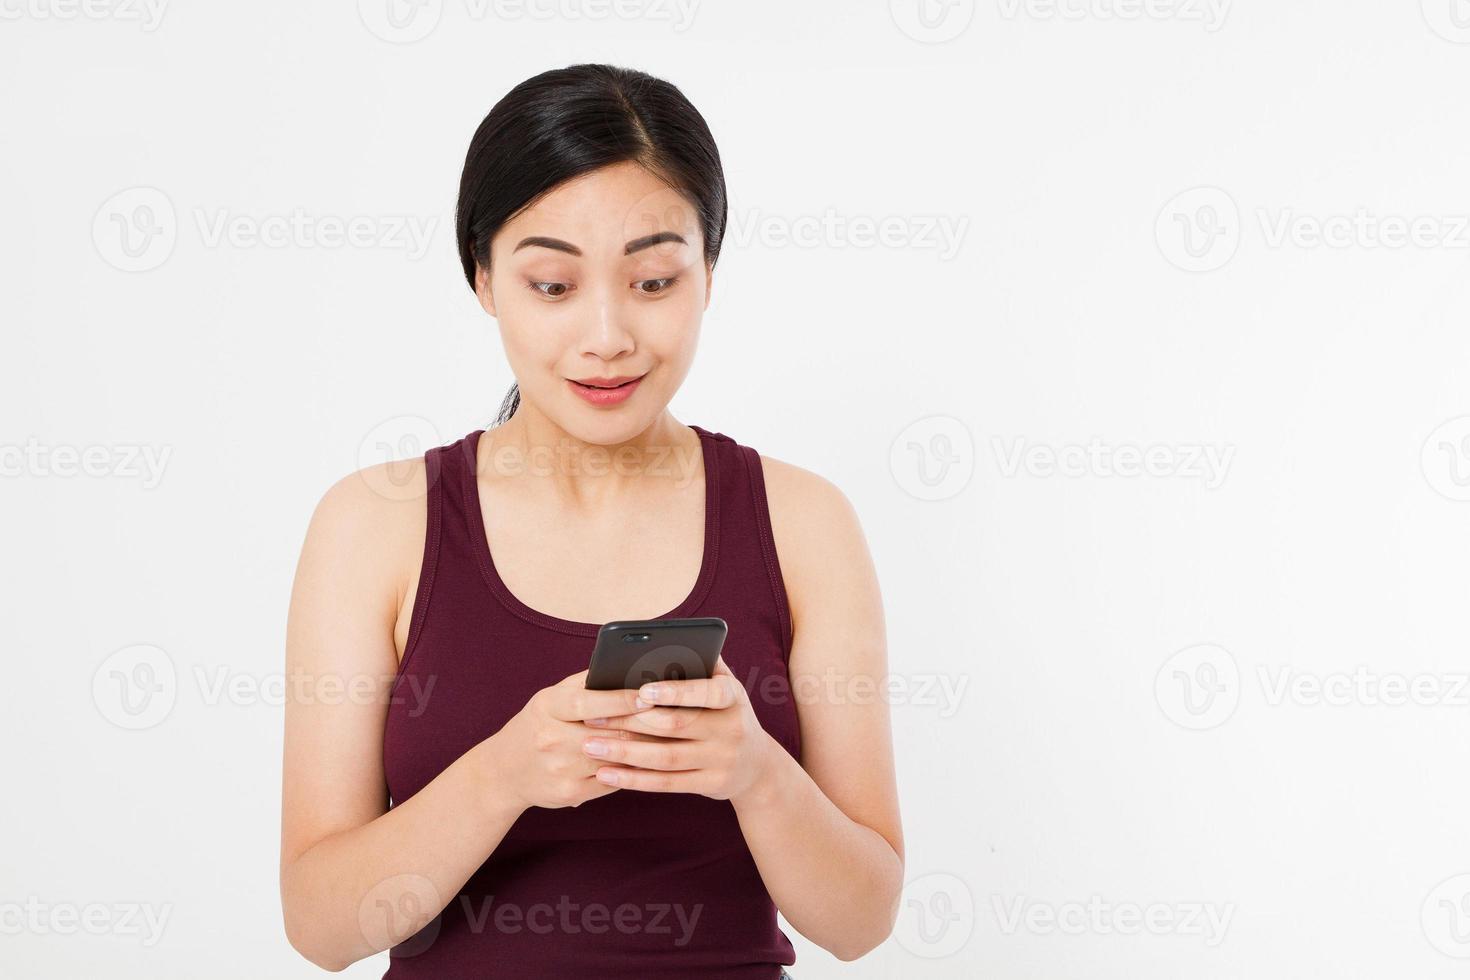 leende asiatisk, japansk kvinna håller svart smartphone, mobiltelefon isolerad på vit bakgrund. kopieringsutrymme. foto